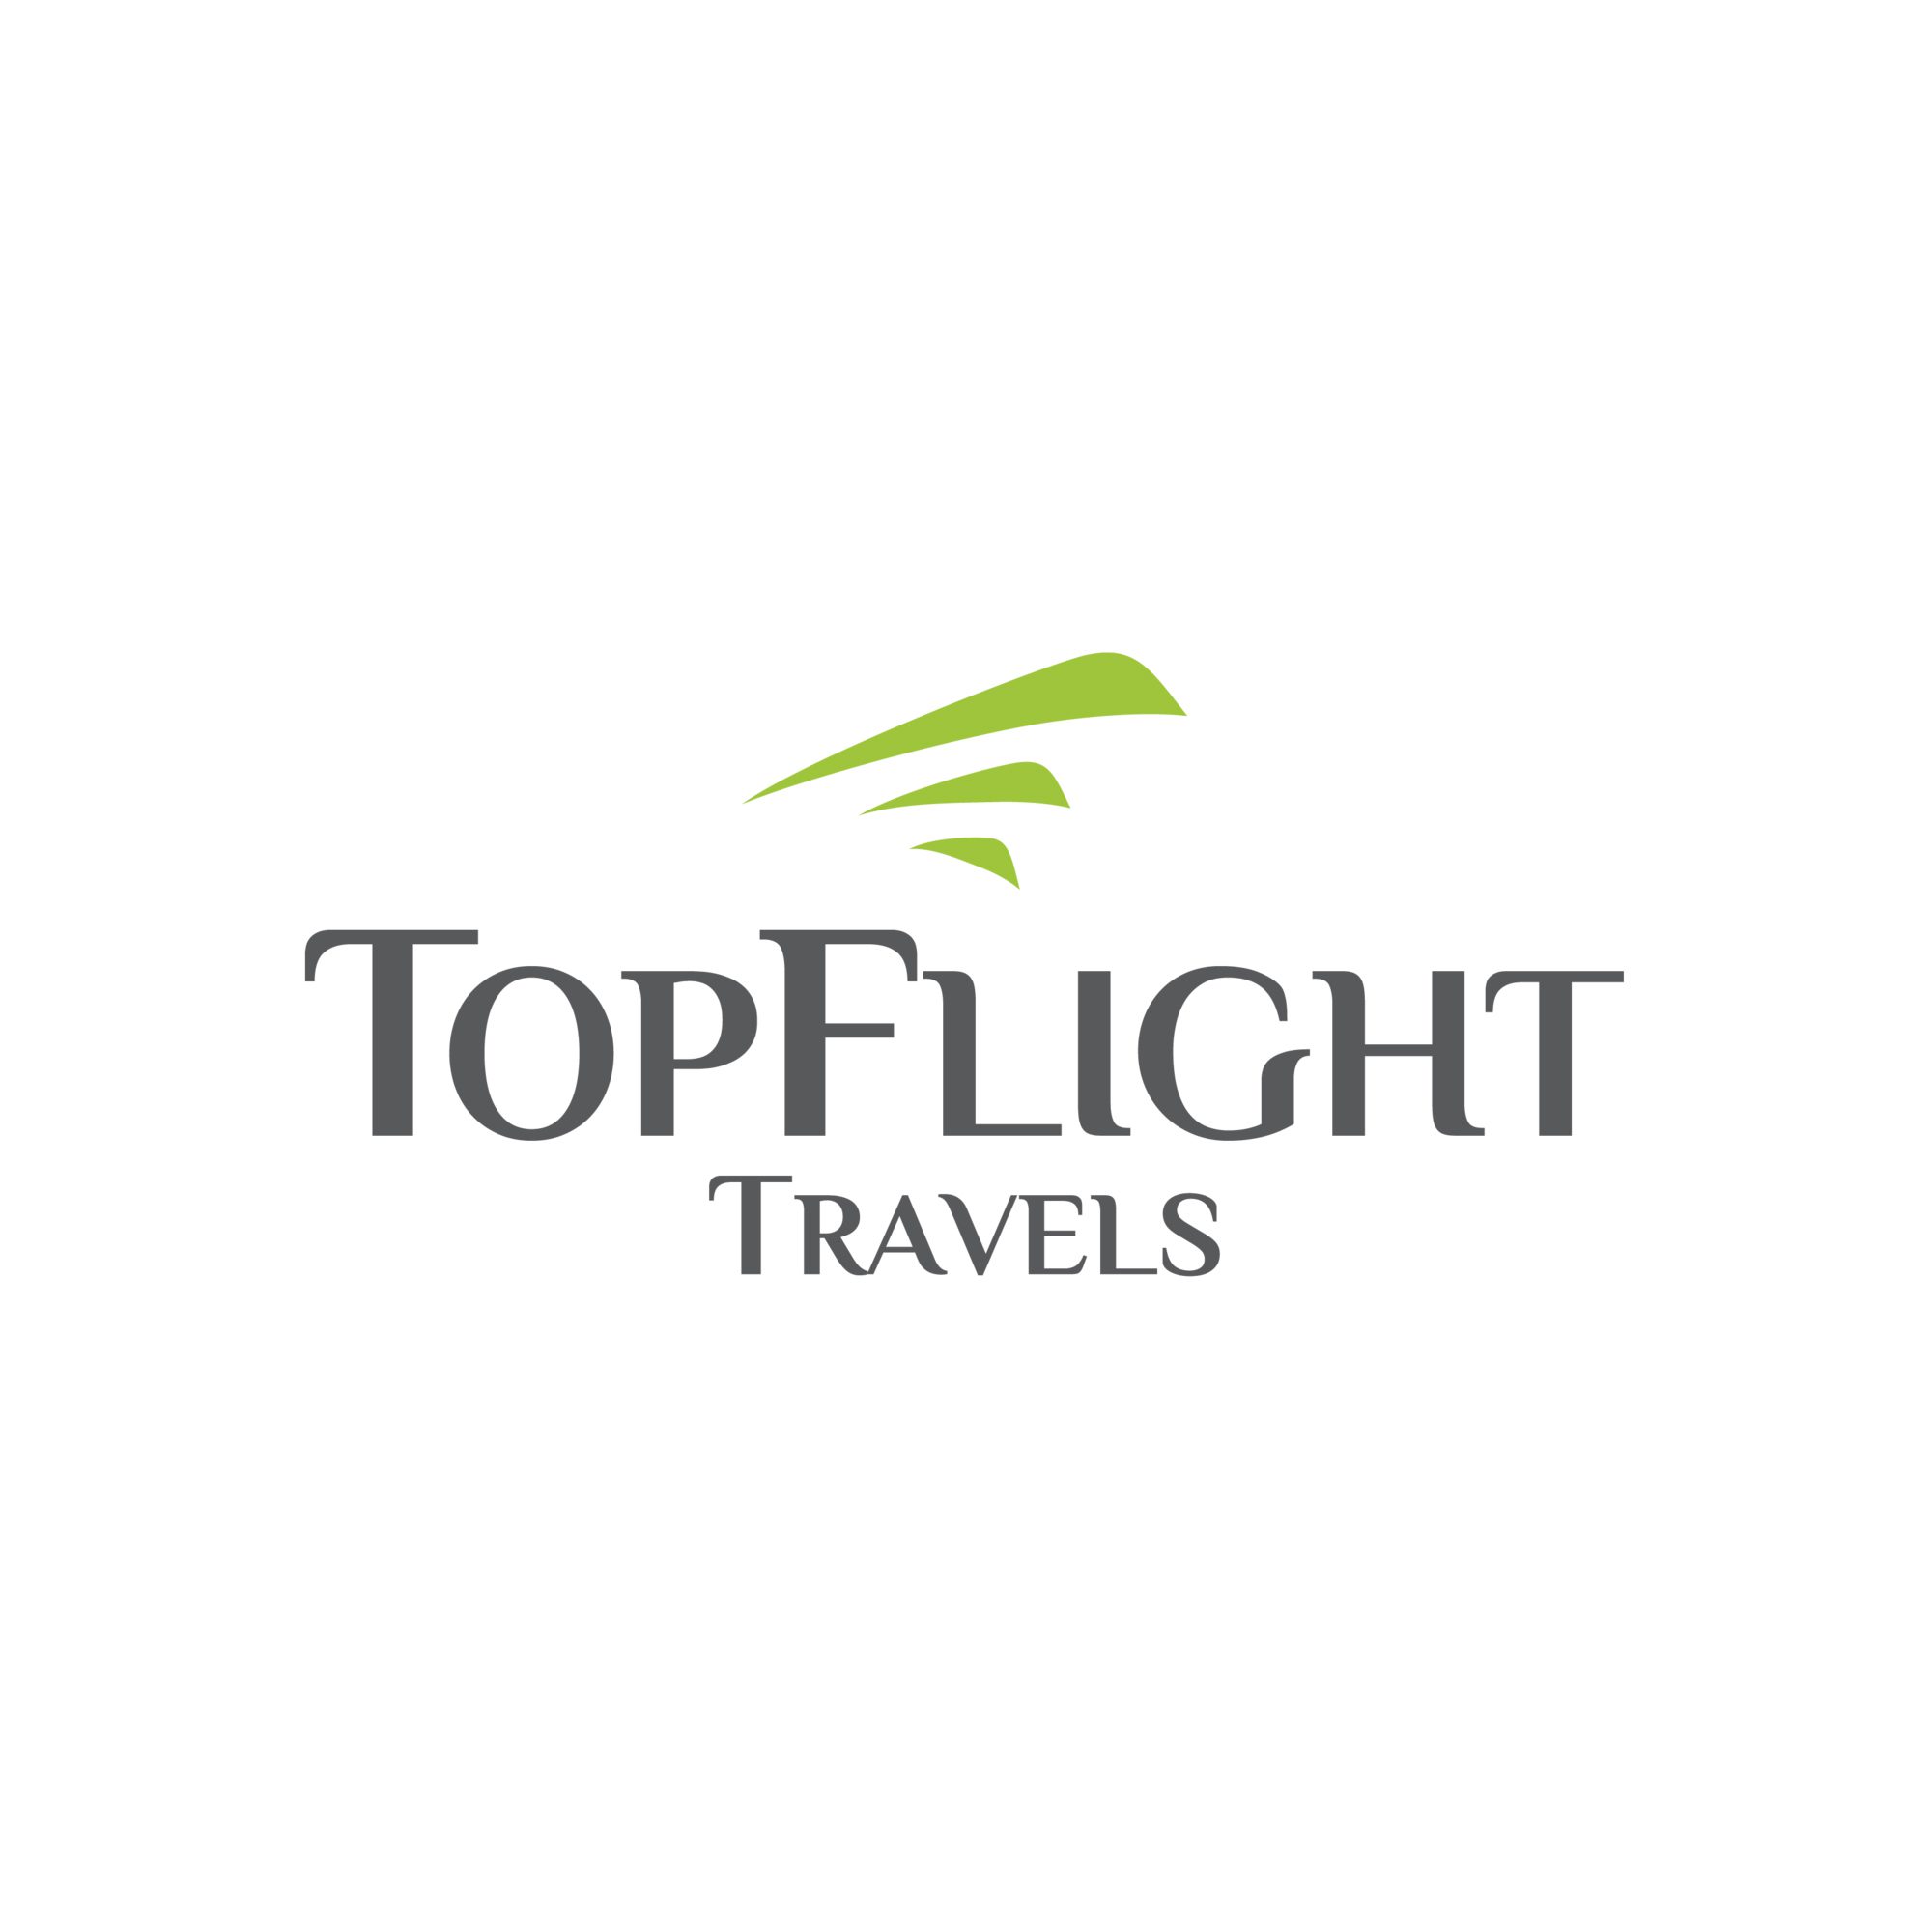 TopFlight Travels Logo